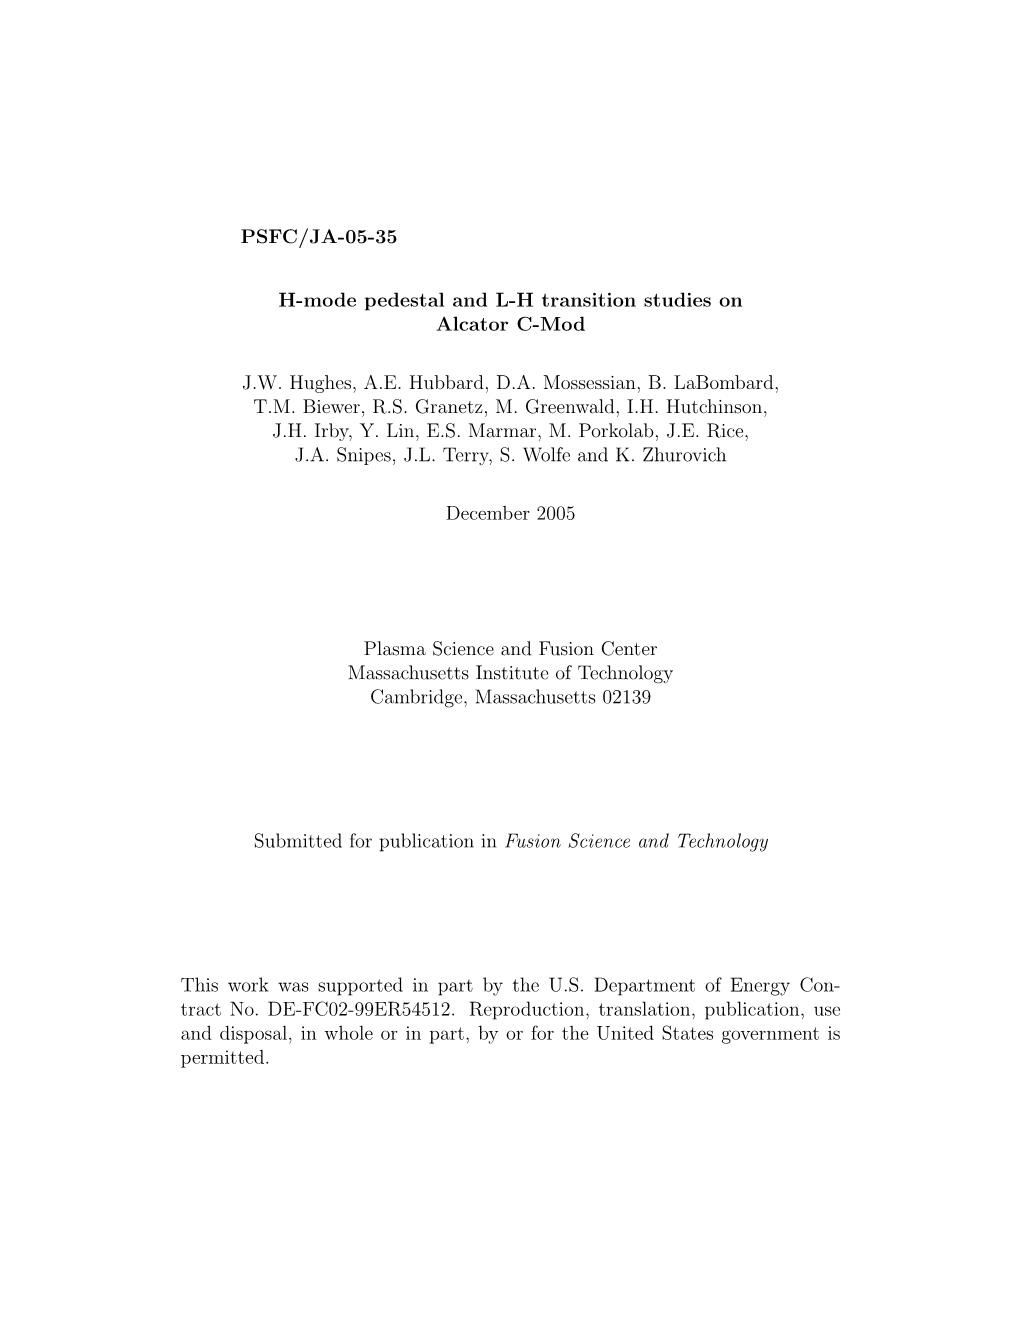 PSFC/JA-05-35 H-Mode Pedestal and L-H Transition Studies on Alcator C